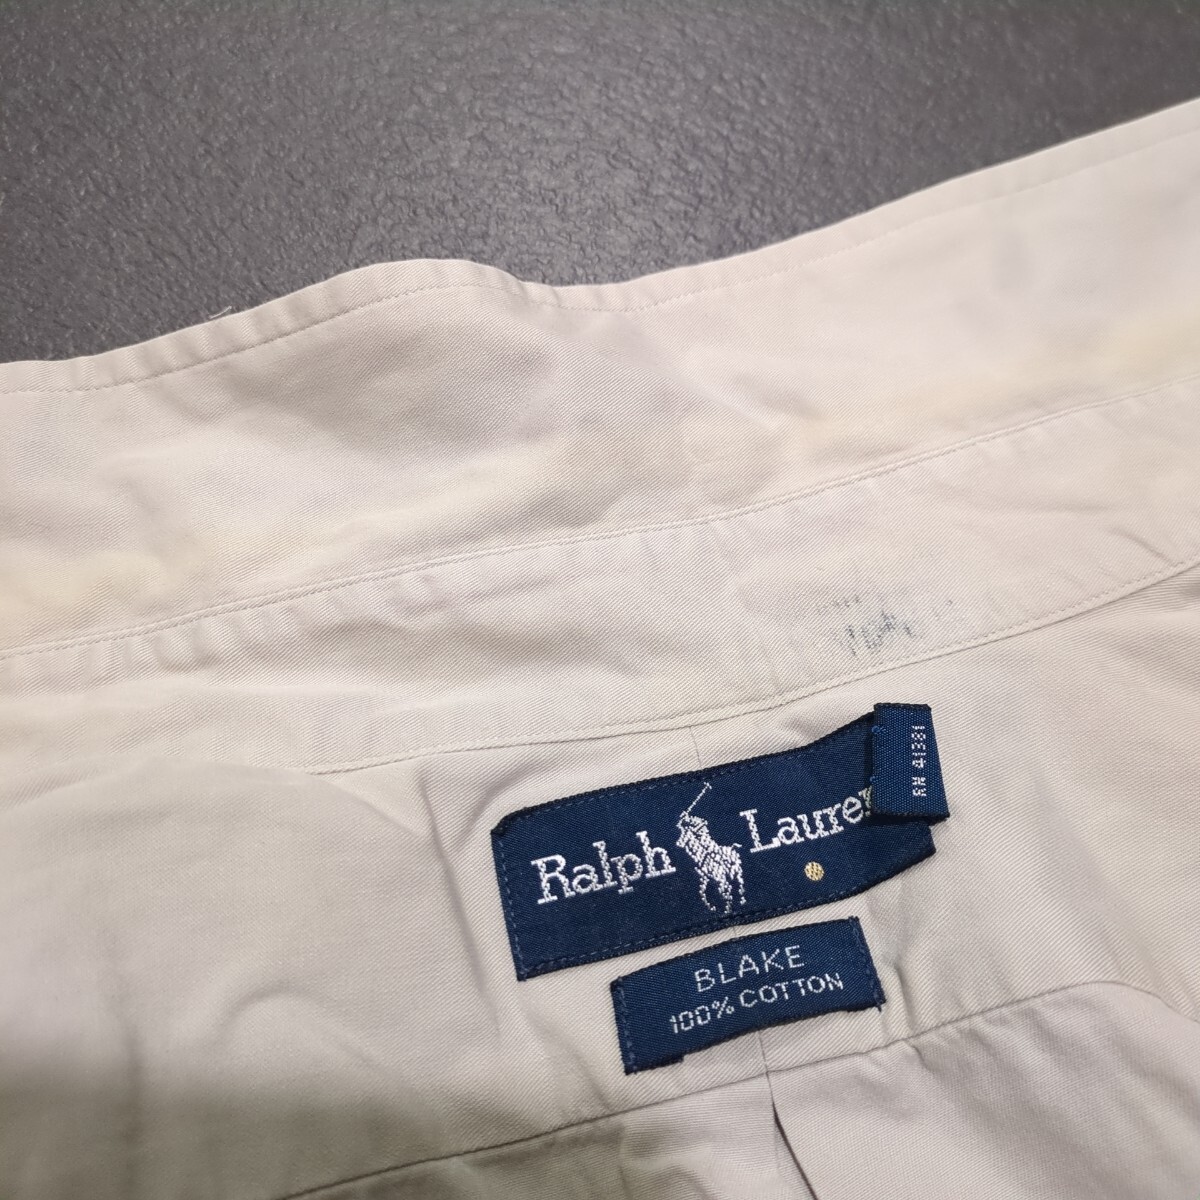 RALPH LAUREN Ralph Lauren BLAKE COTTON XL кнопка down рубашка большой размер большой Silhouette большой размер рубашка с длинным рукавом po колено одноцветный 